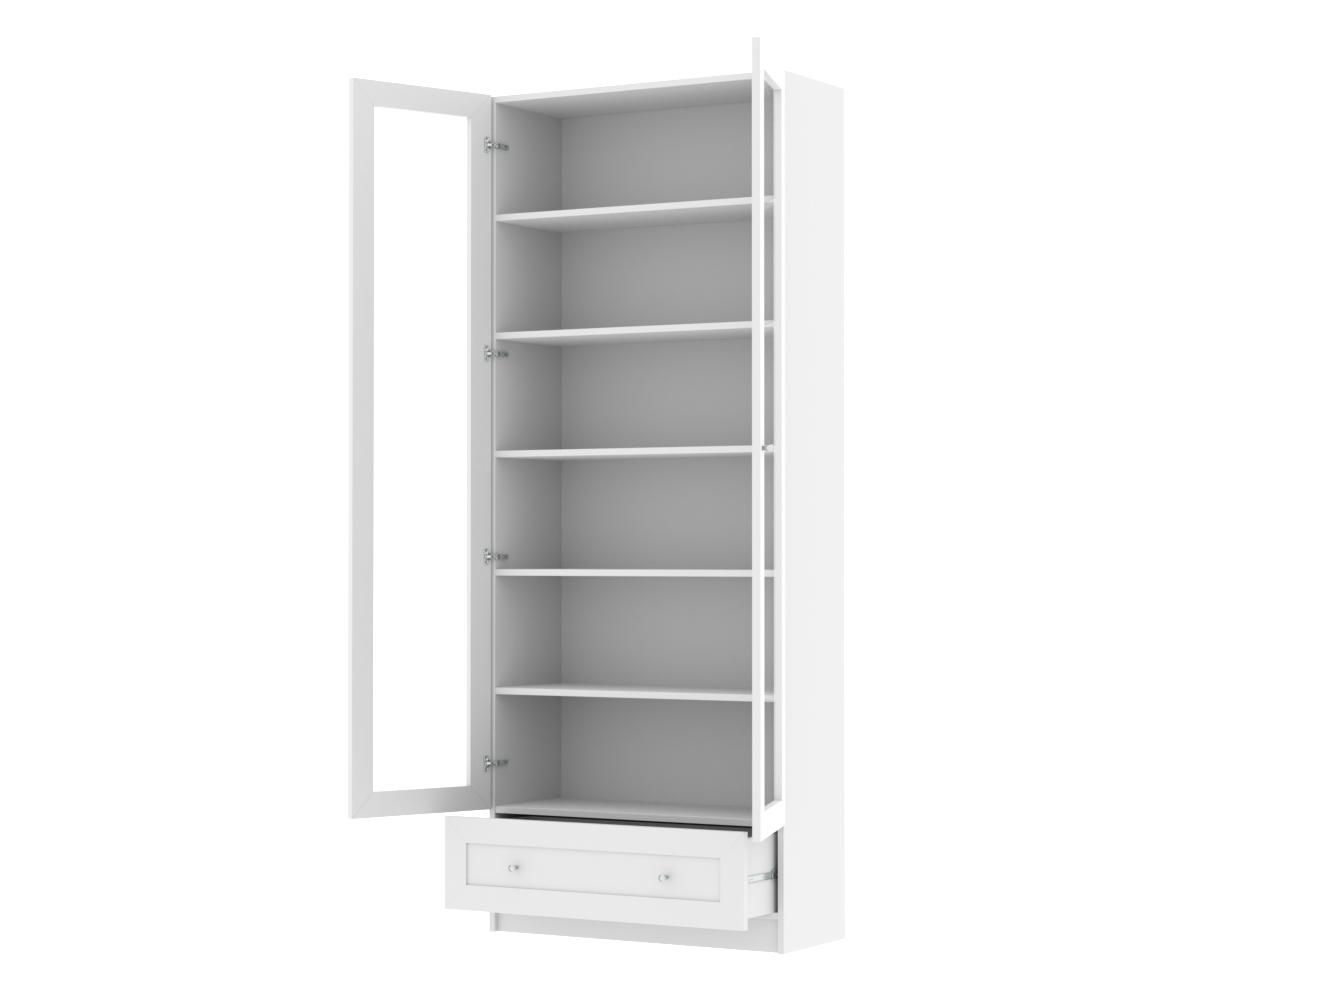  Книжный шкаф Билли 427 white ИКЕА (IKEA) изображение товара